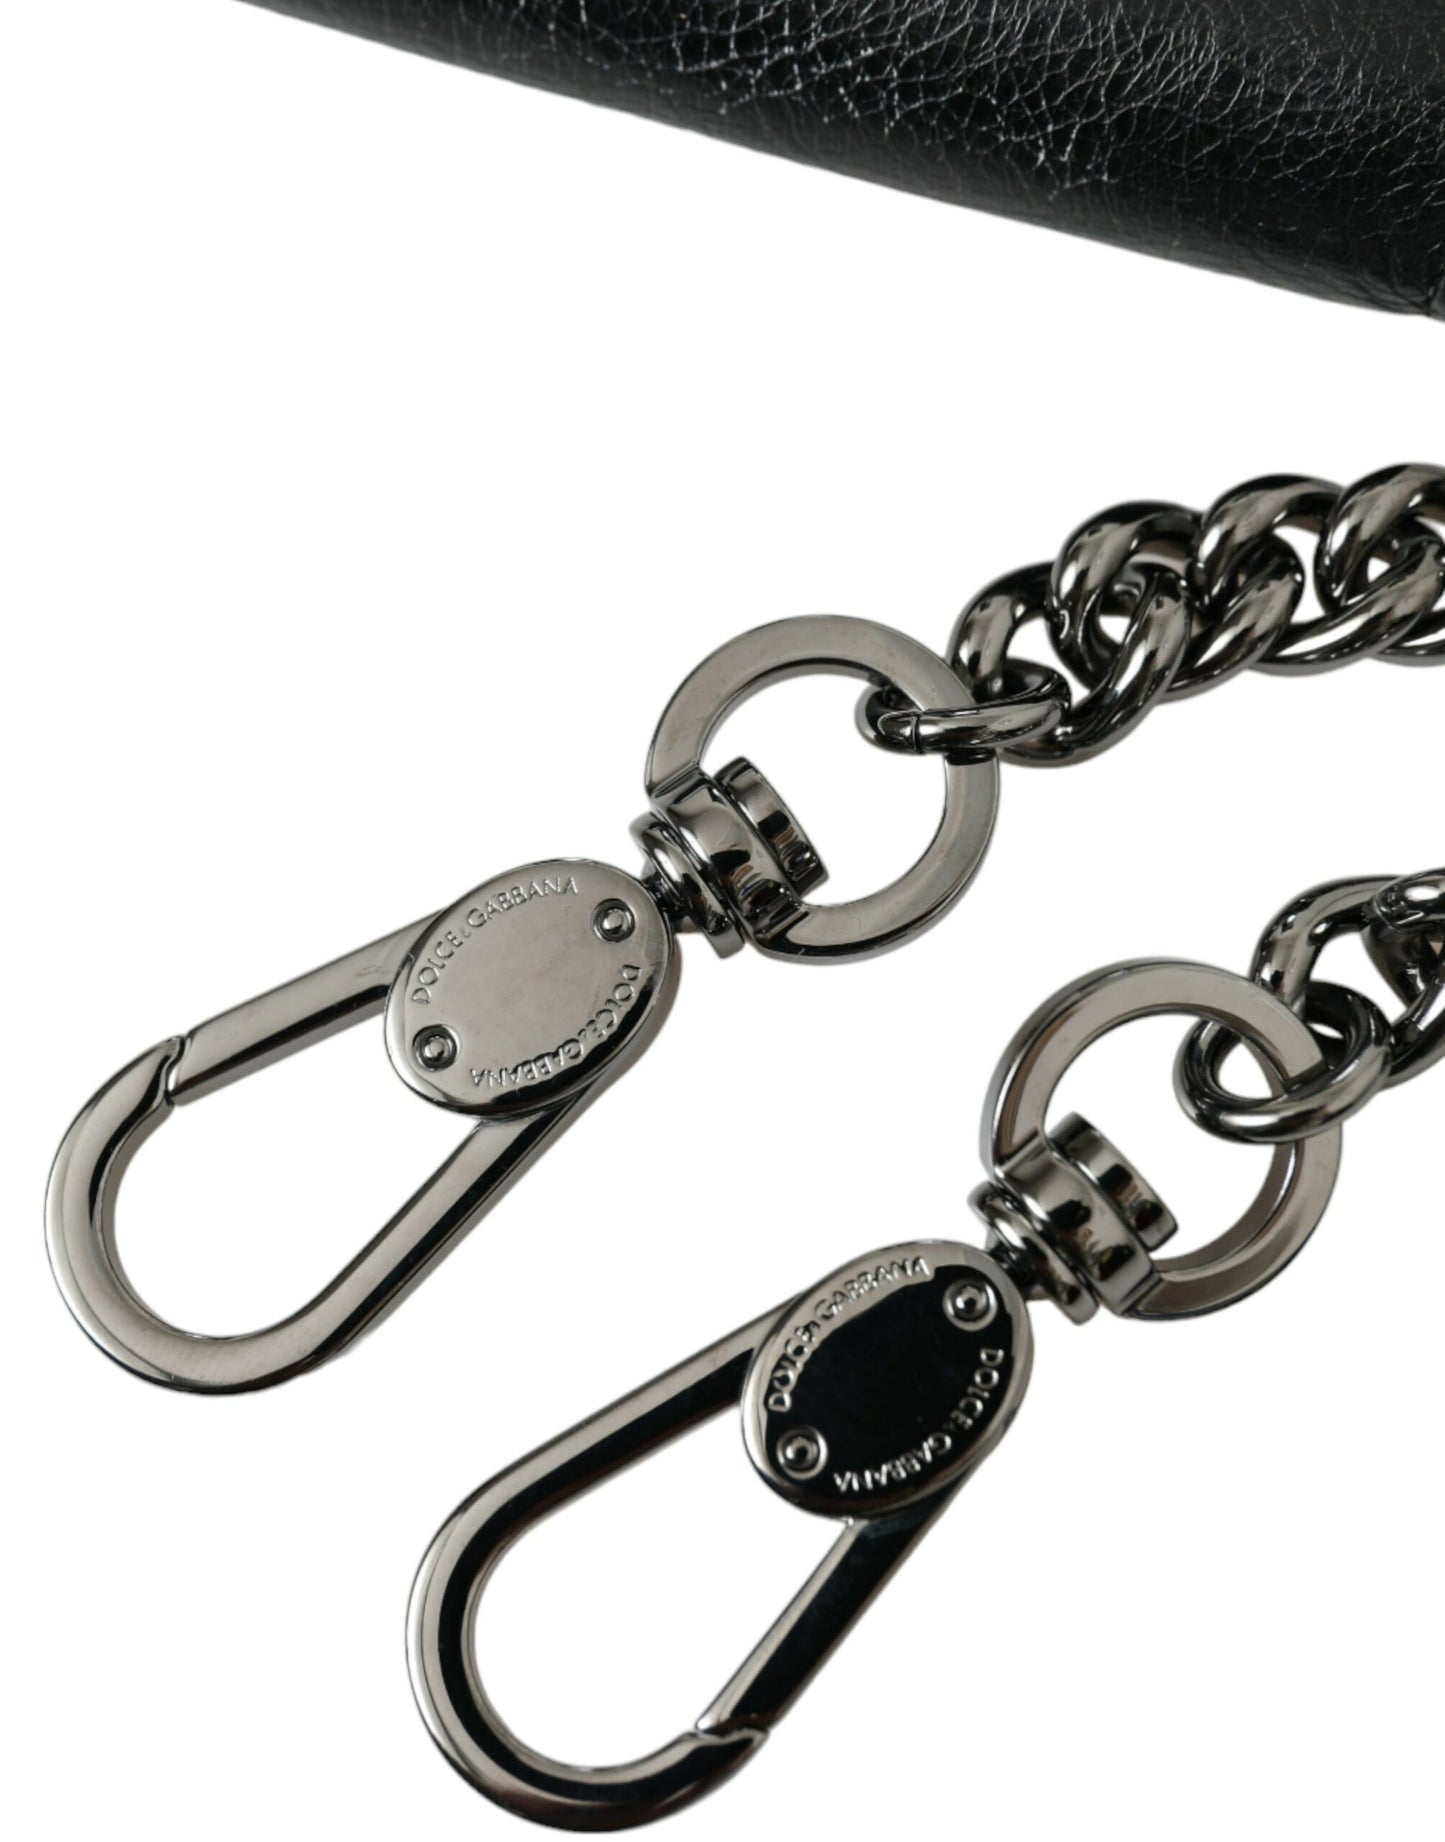 Dolce & Gabbana Black Lamb Leather Logo Card Holder Chain Strap Bags